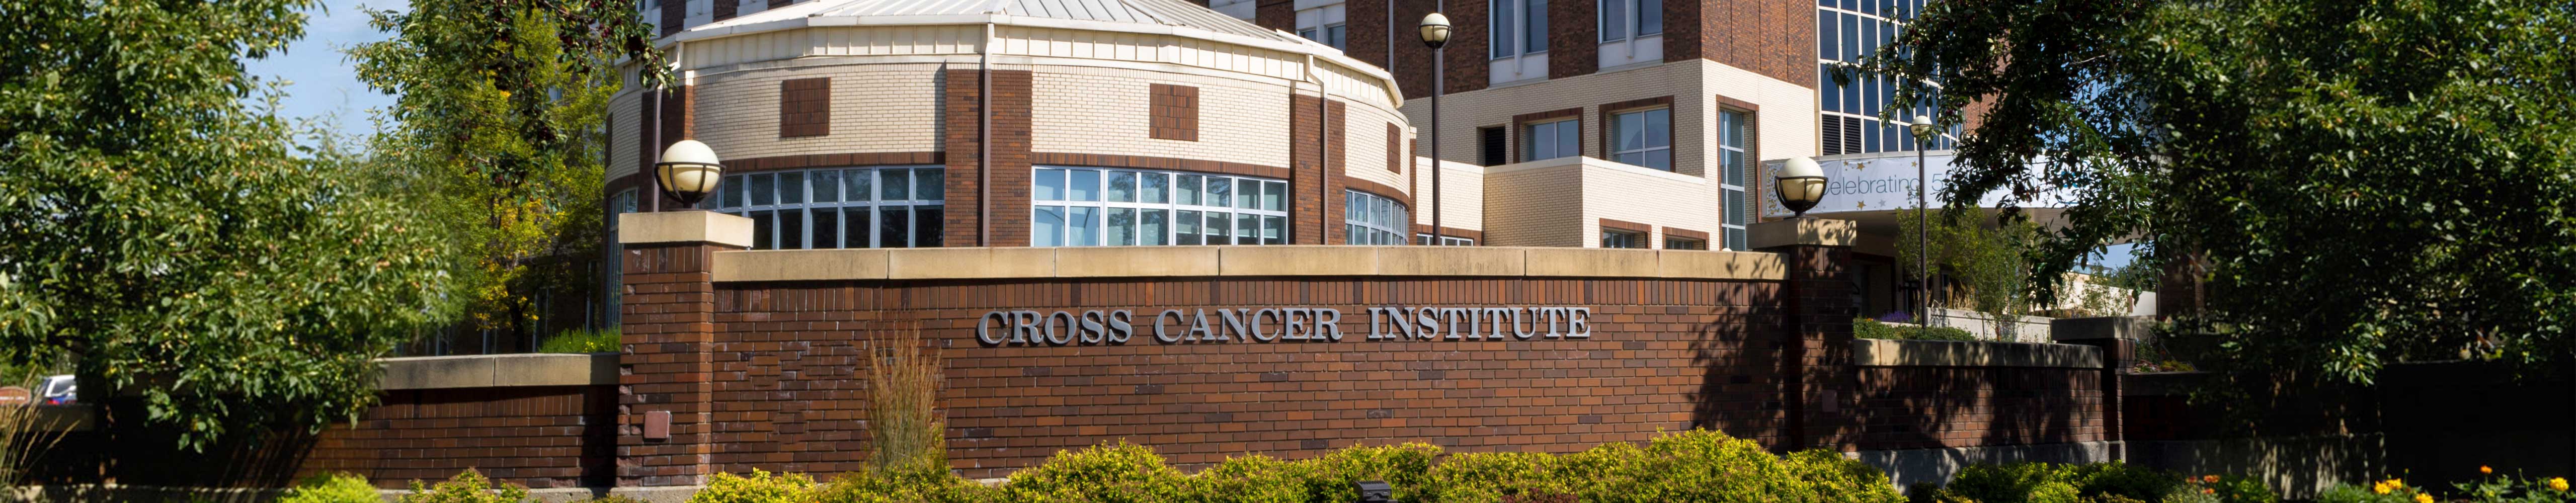 Cross Cancer Institute entrance